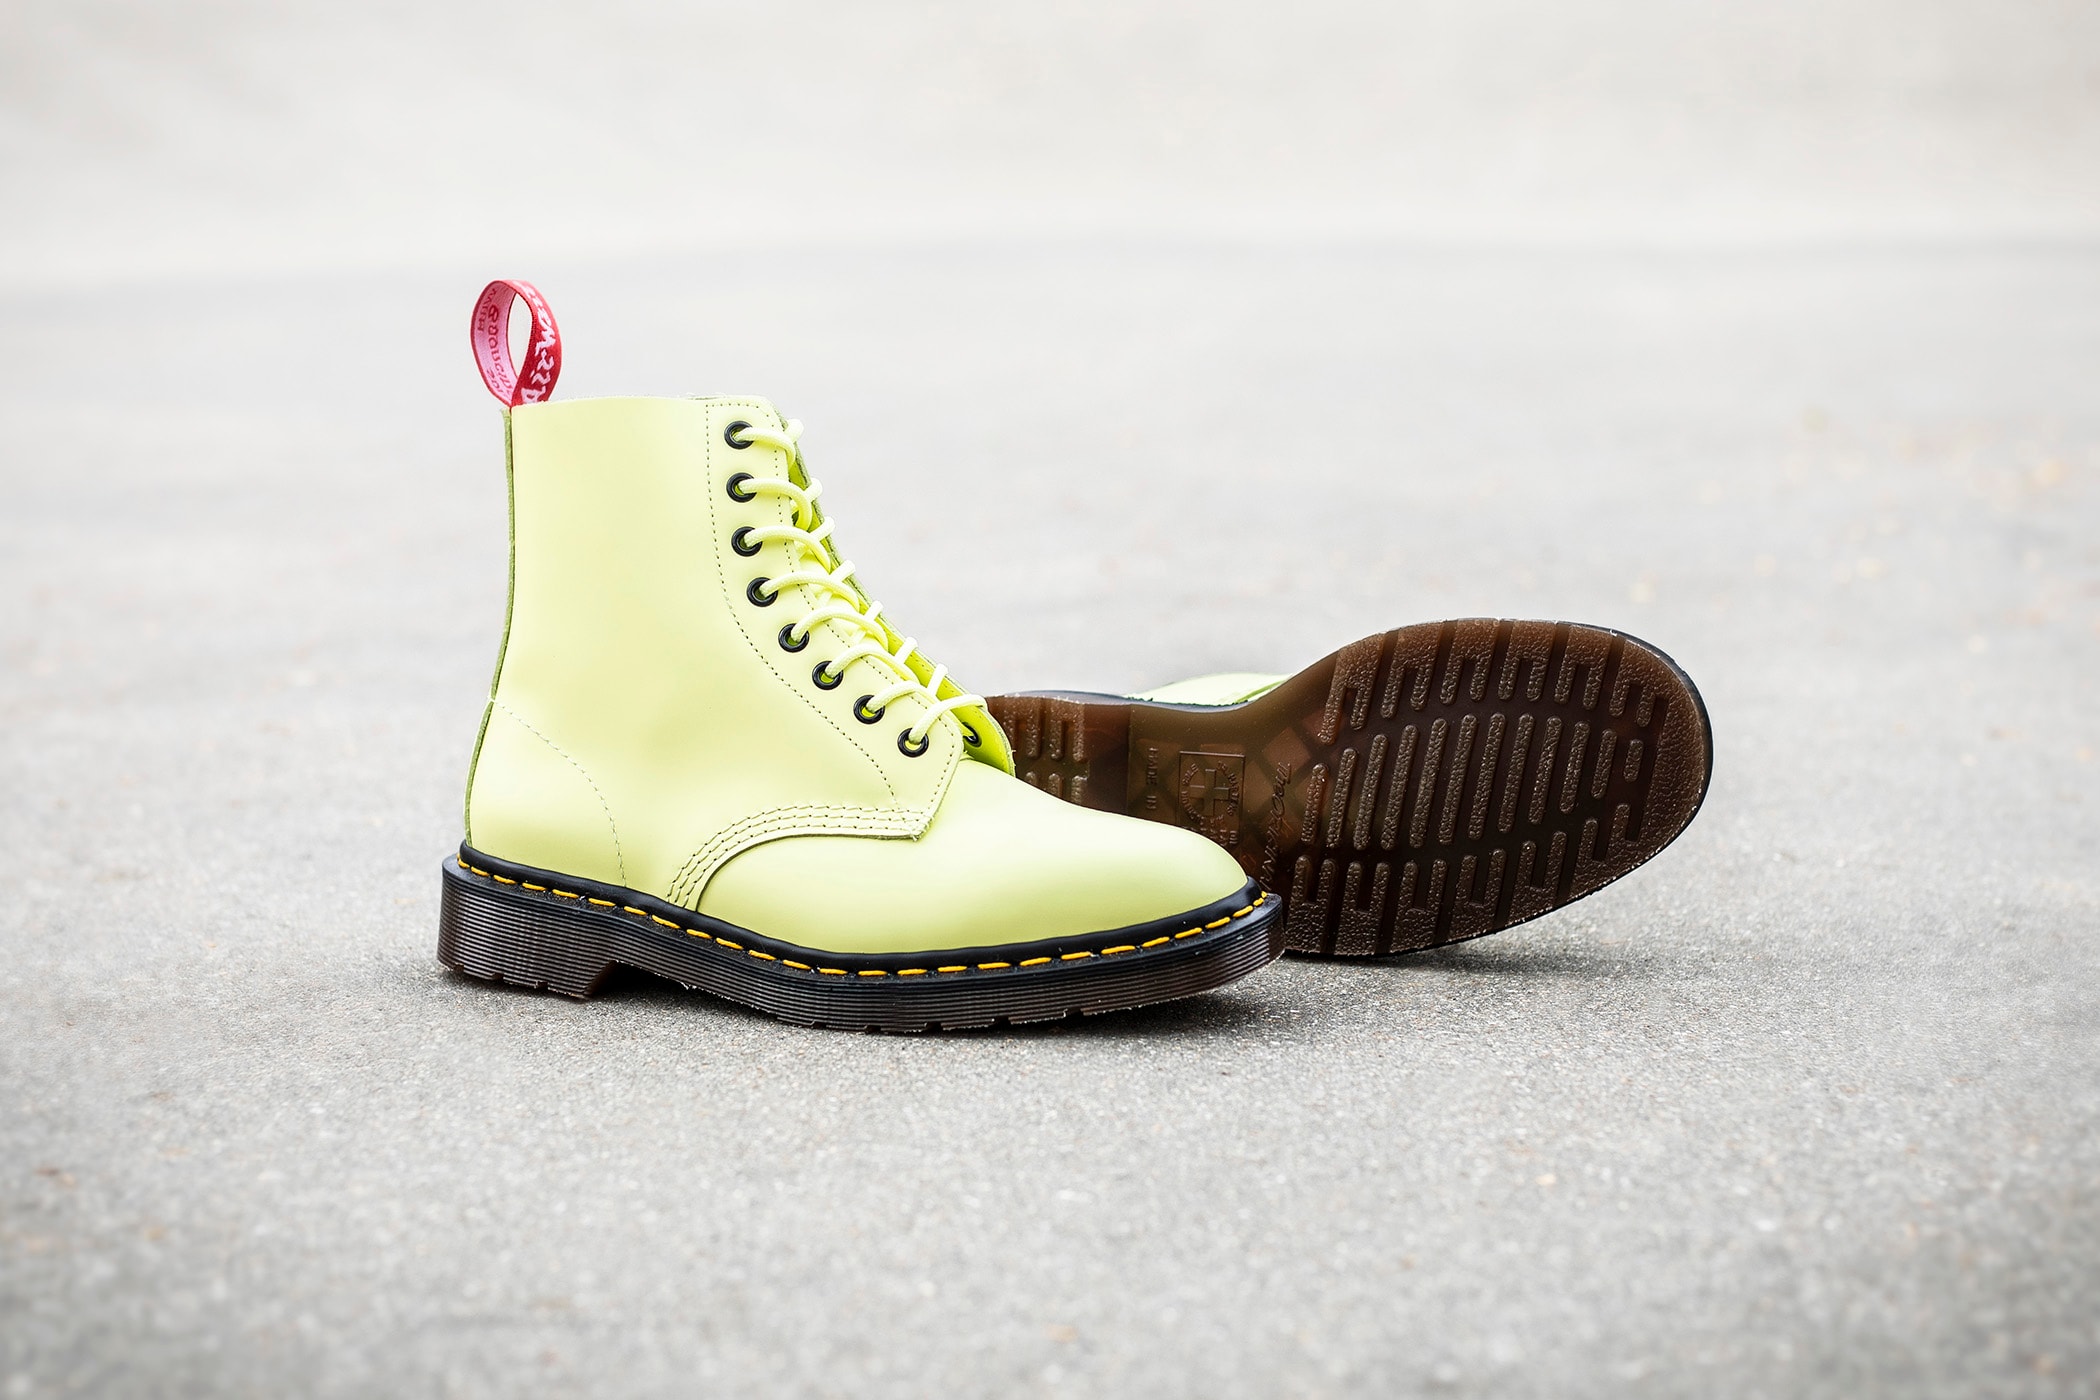 UNDERCOVER x Dr. Martens 全新聯名 1460 靴款系列登場